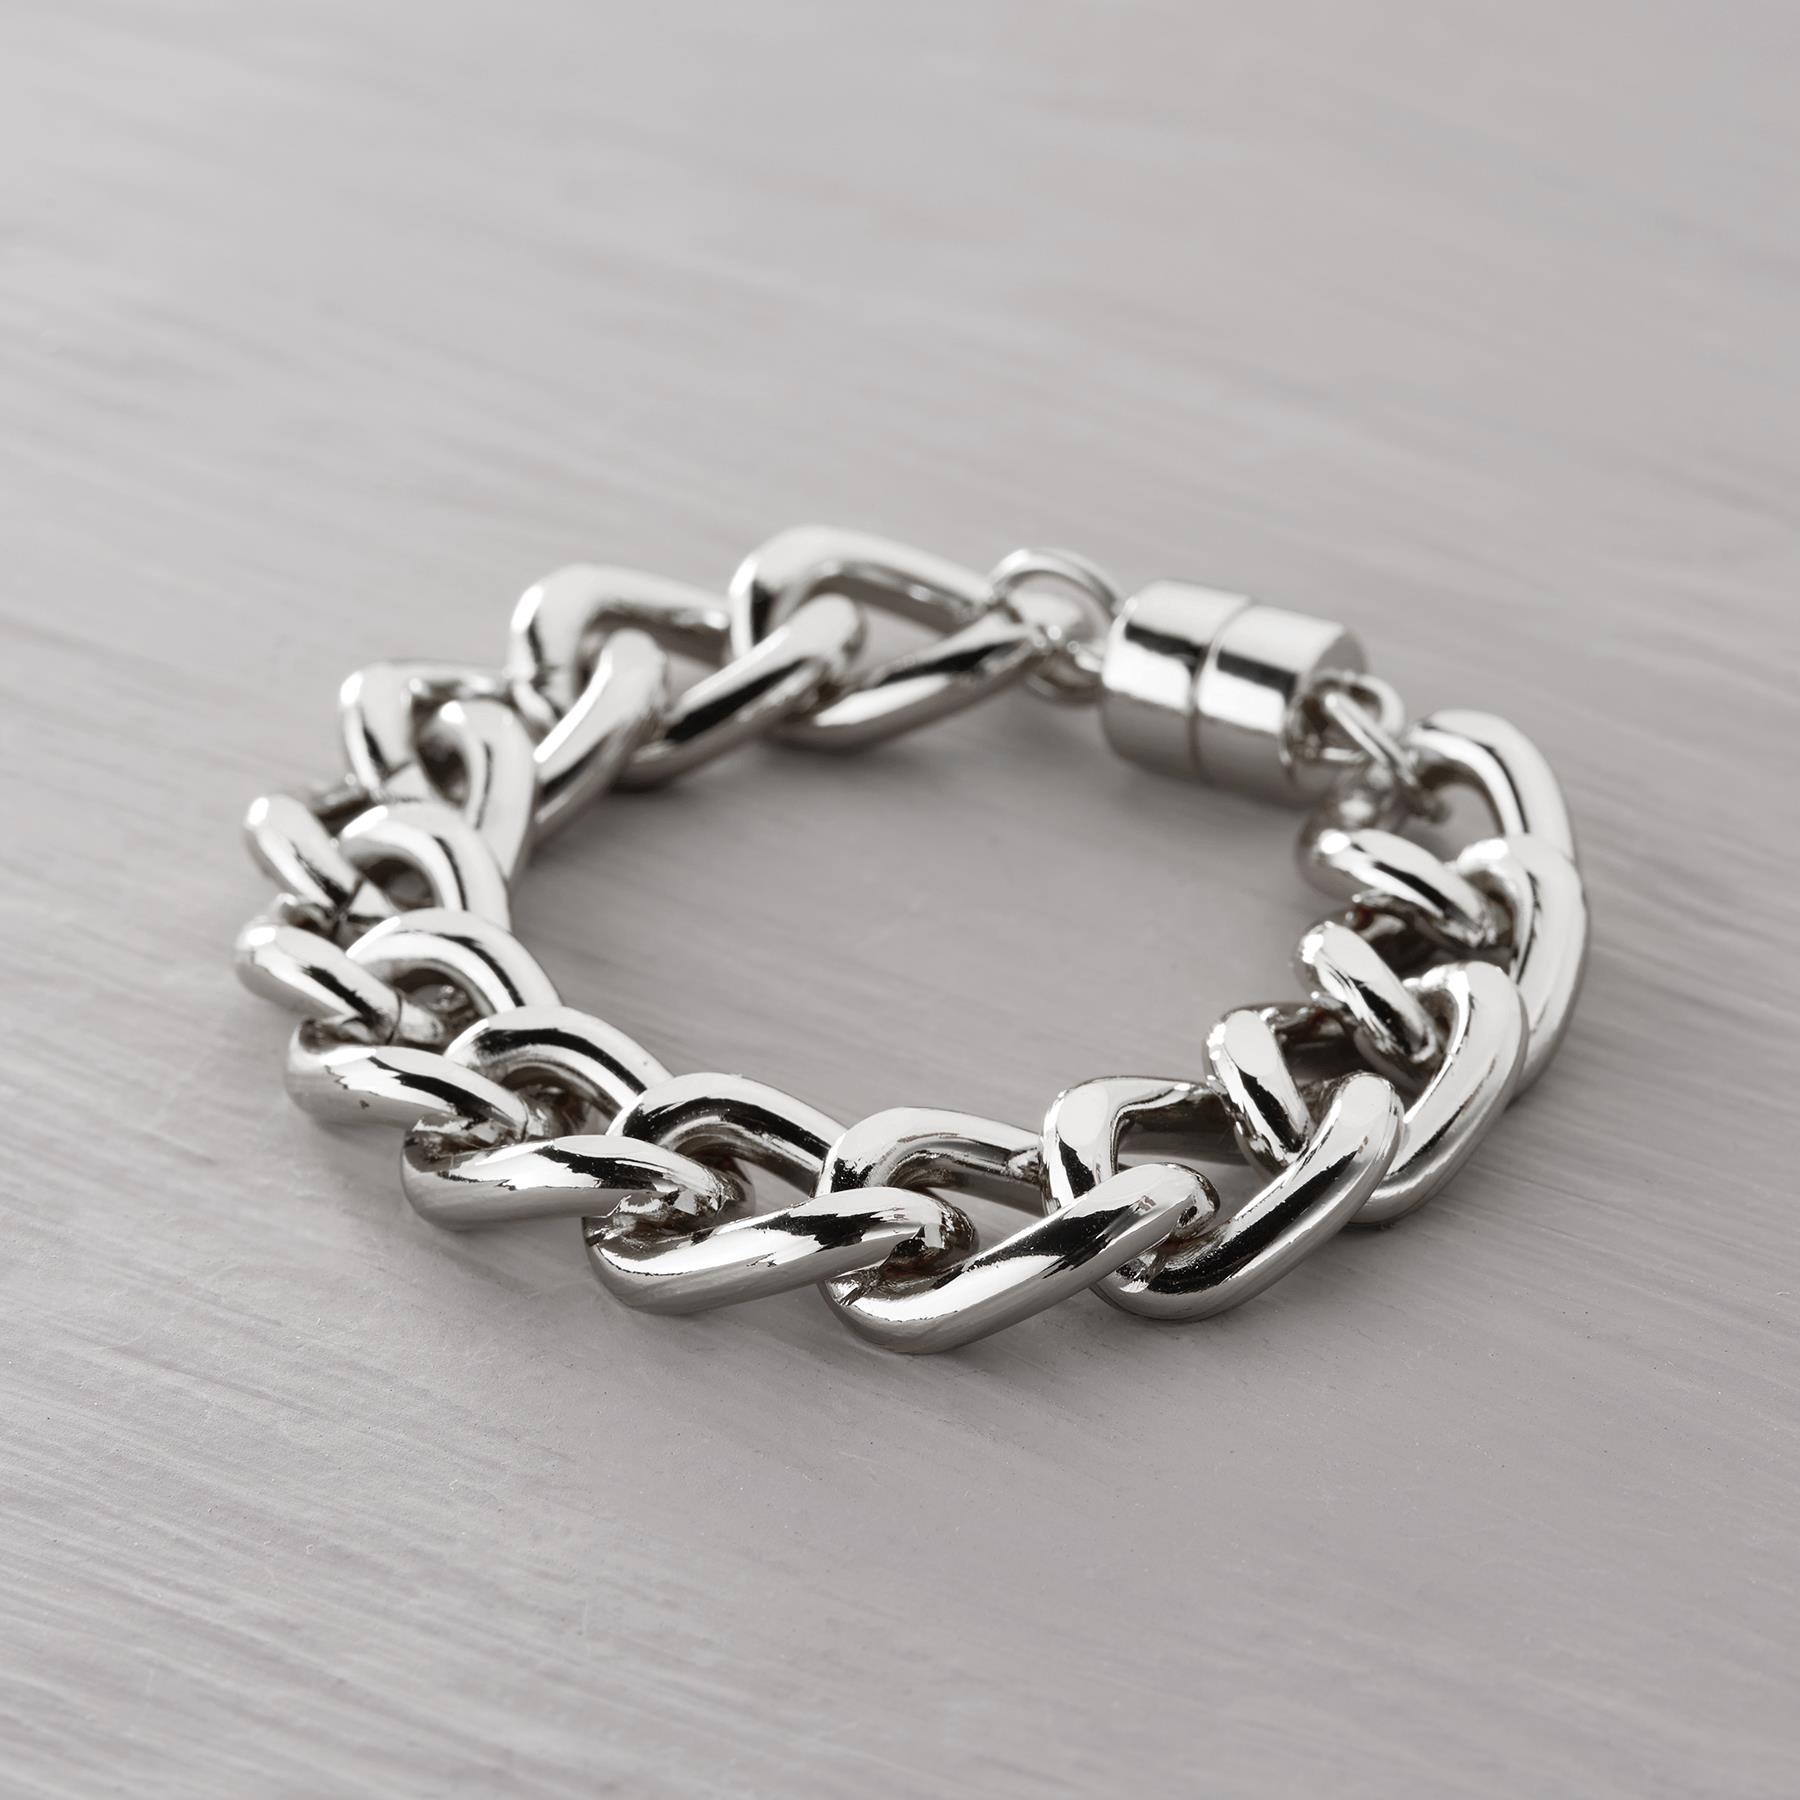 Awareness. Silver chain bracelet